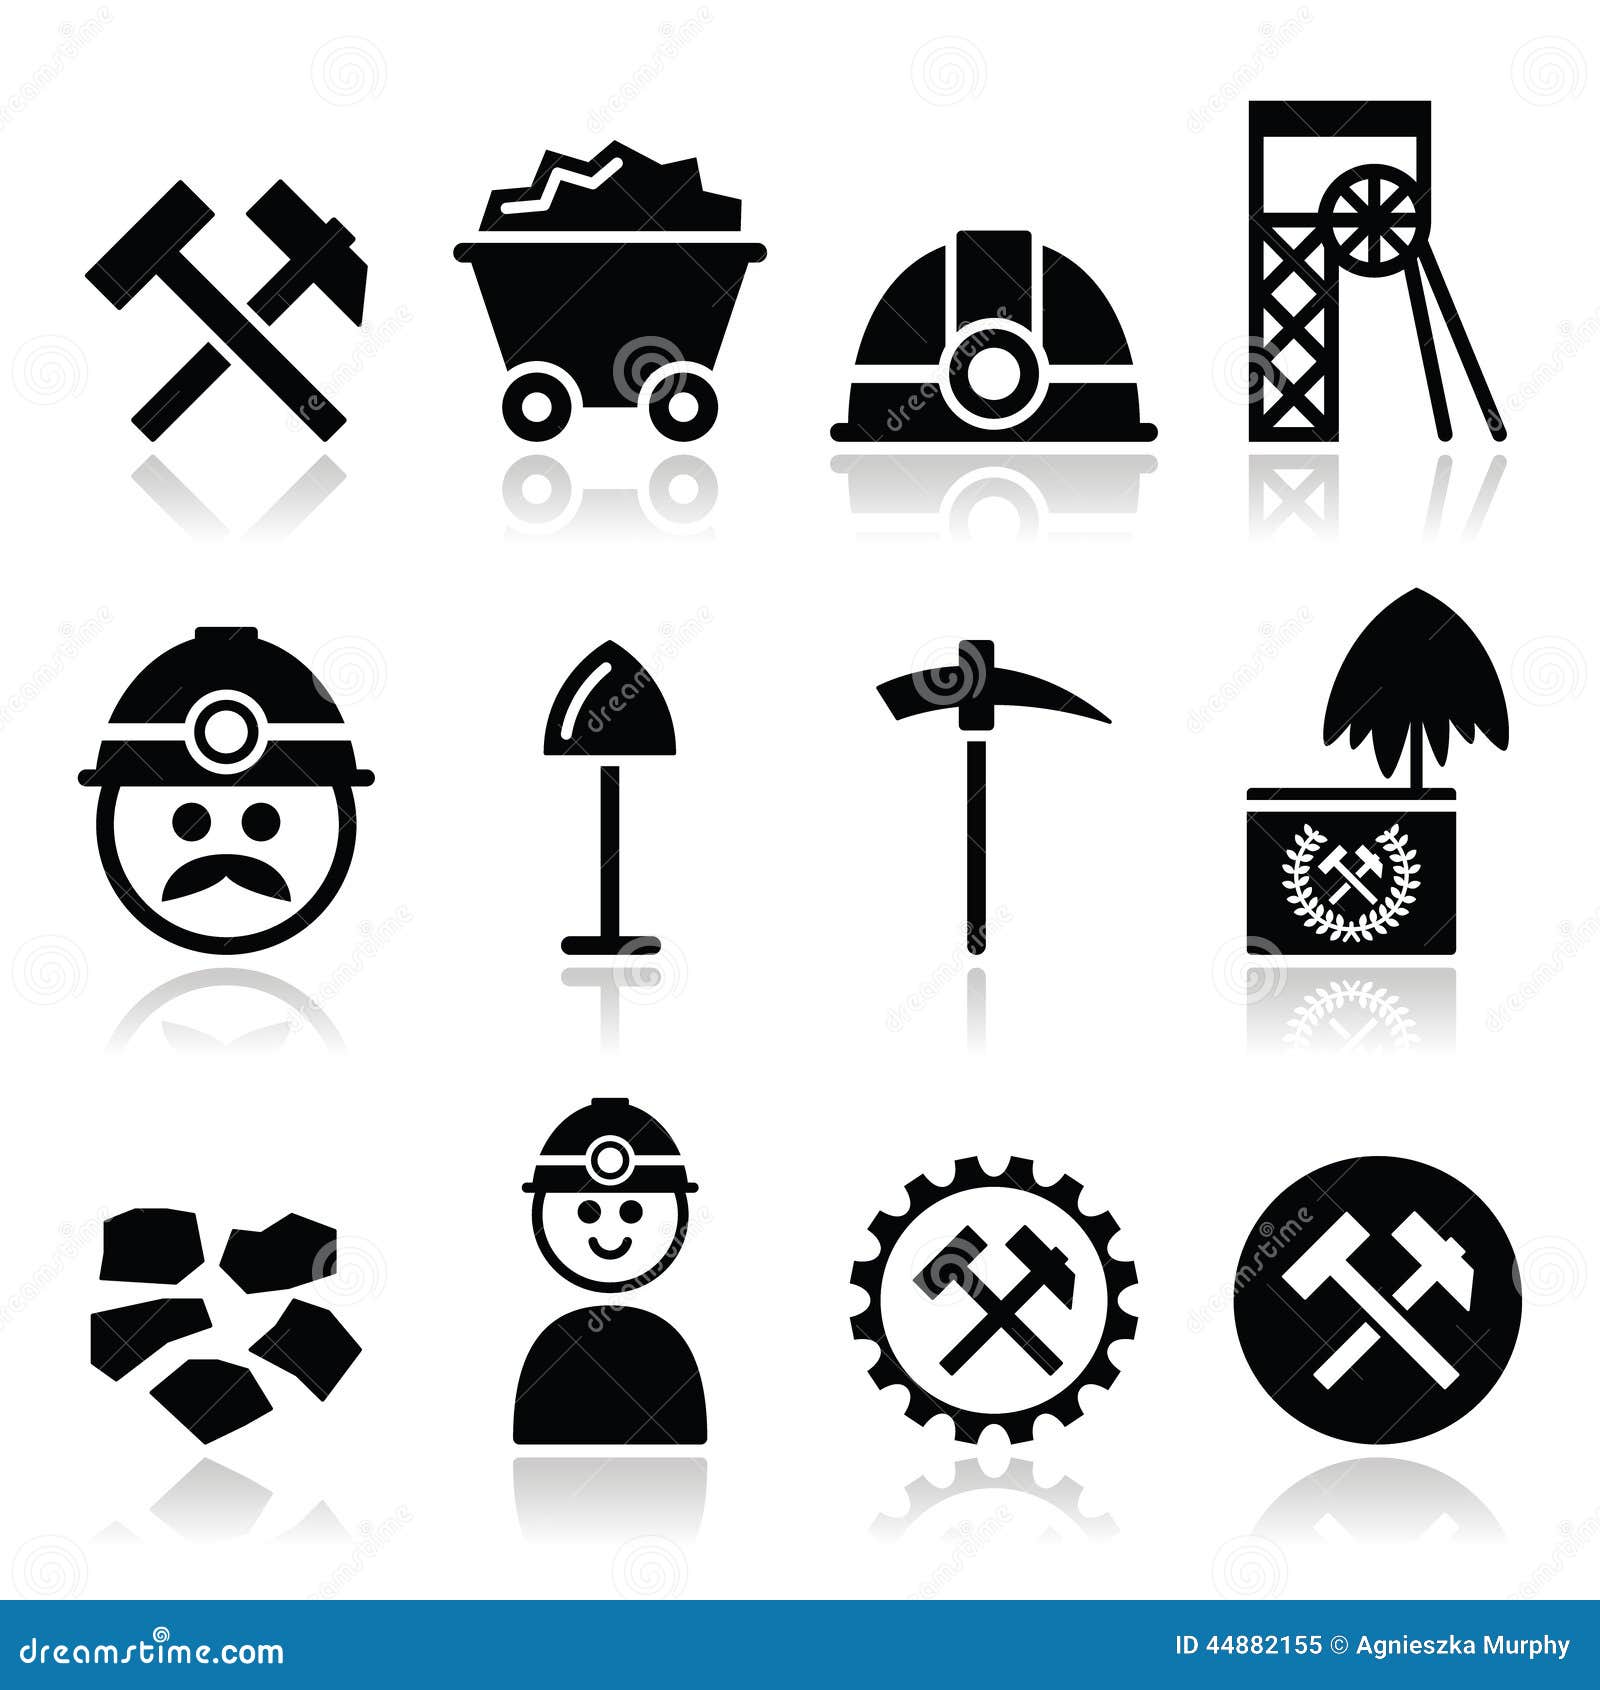 coal mine, miner icons set